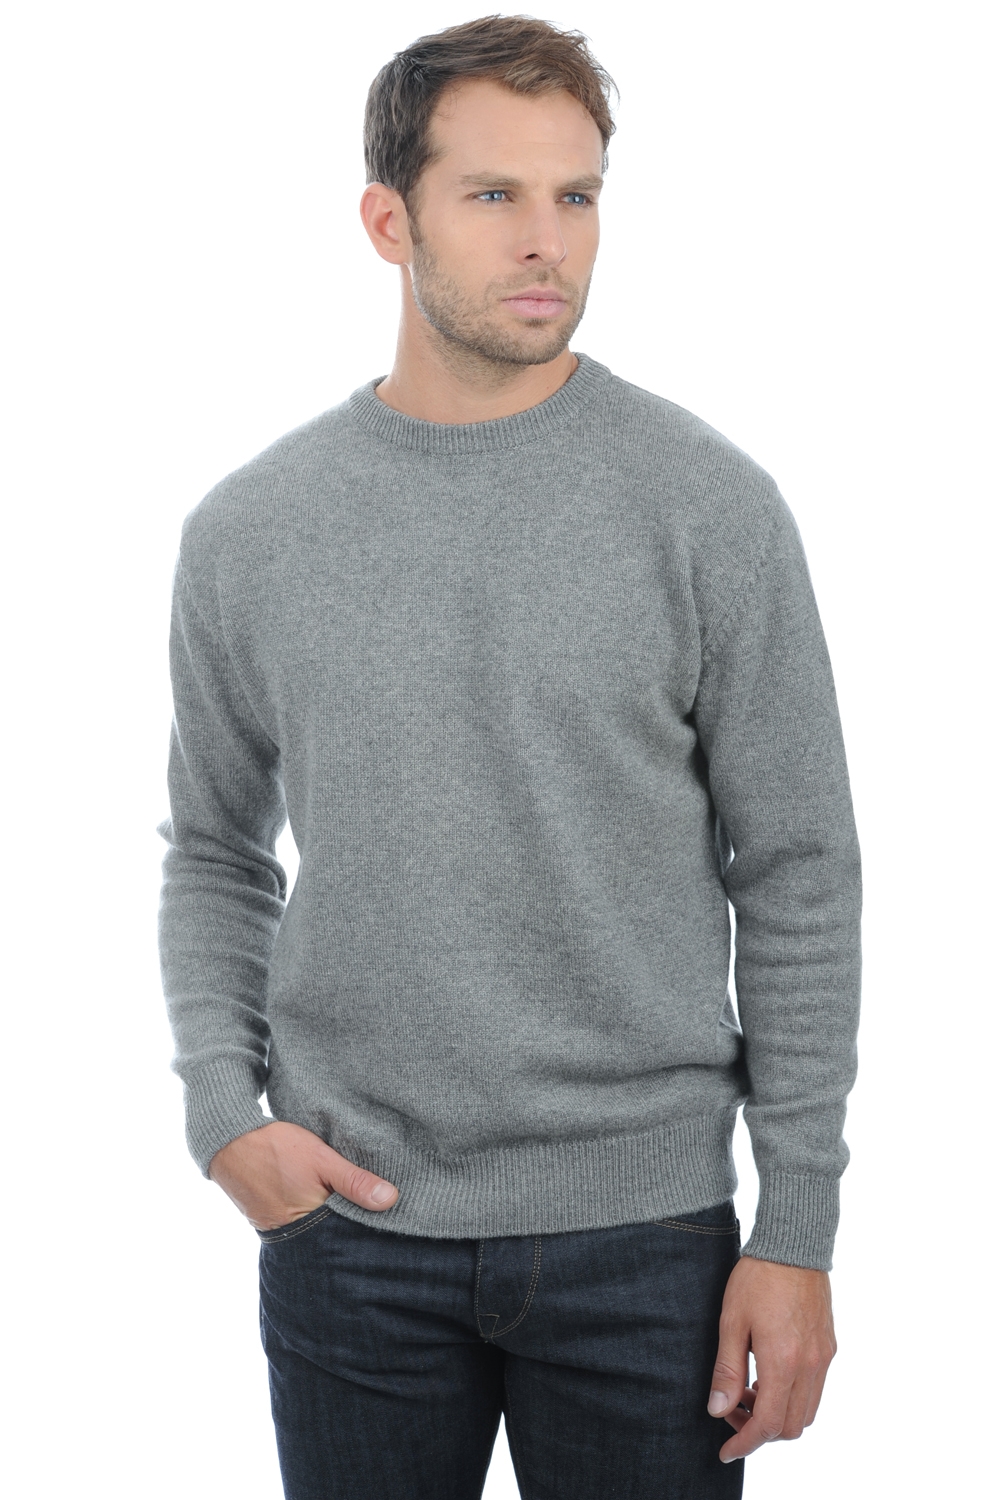 Cashmere men chunky sweater nestor 4f grey marl 2xl